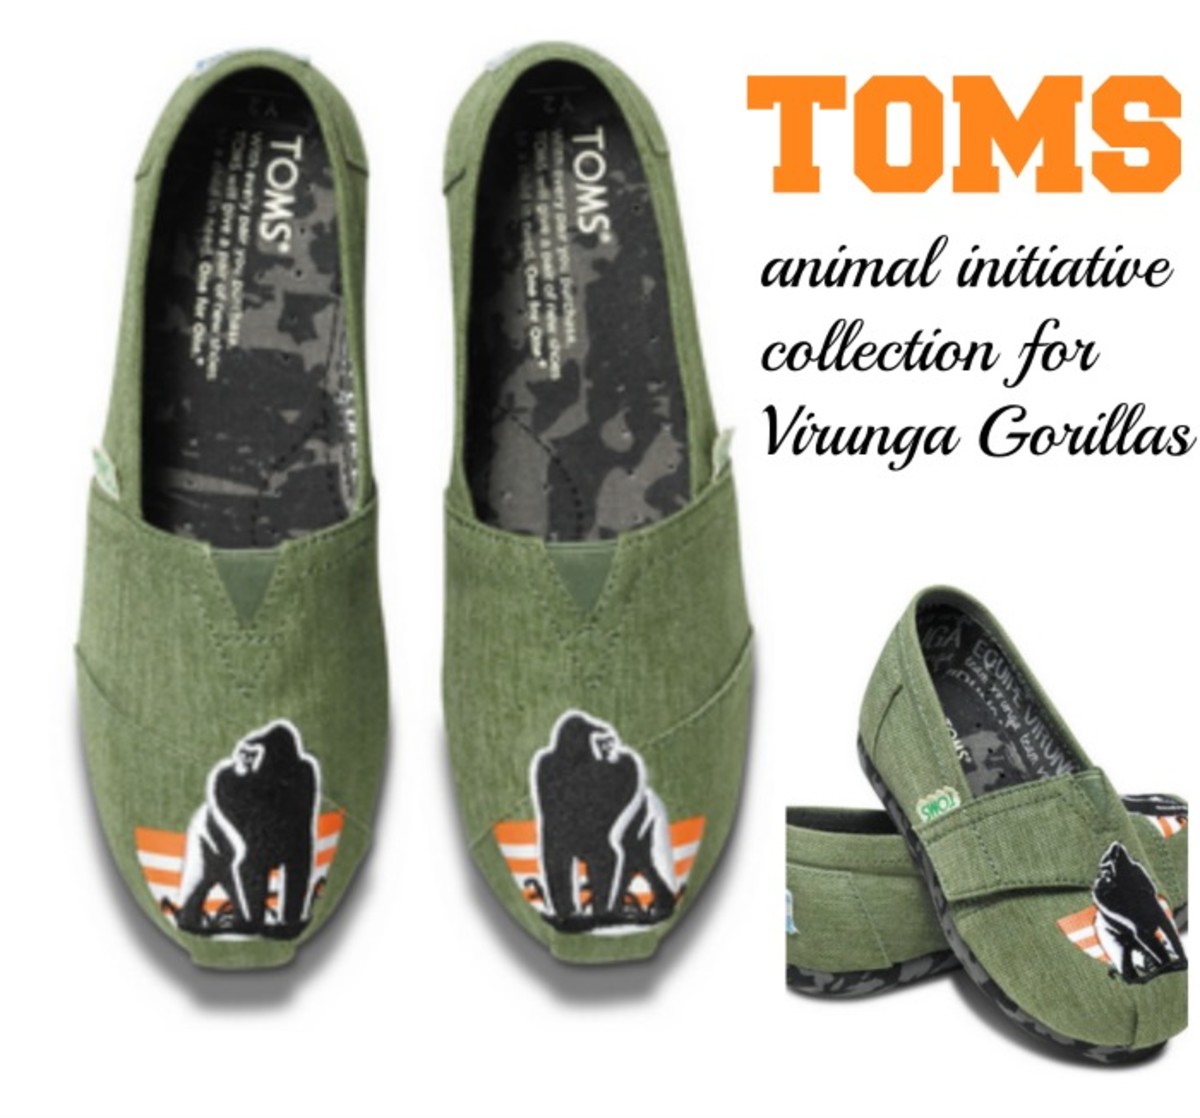 toms animal initiative